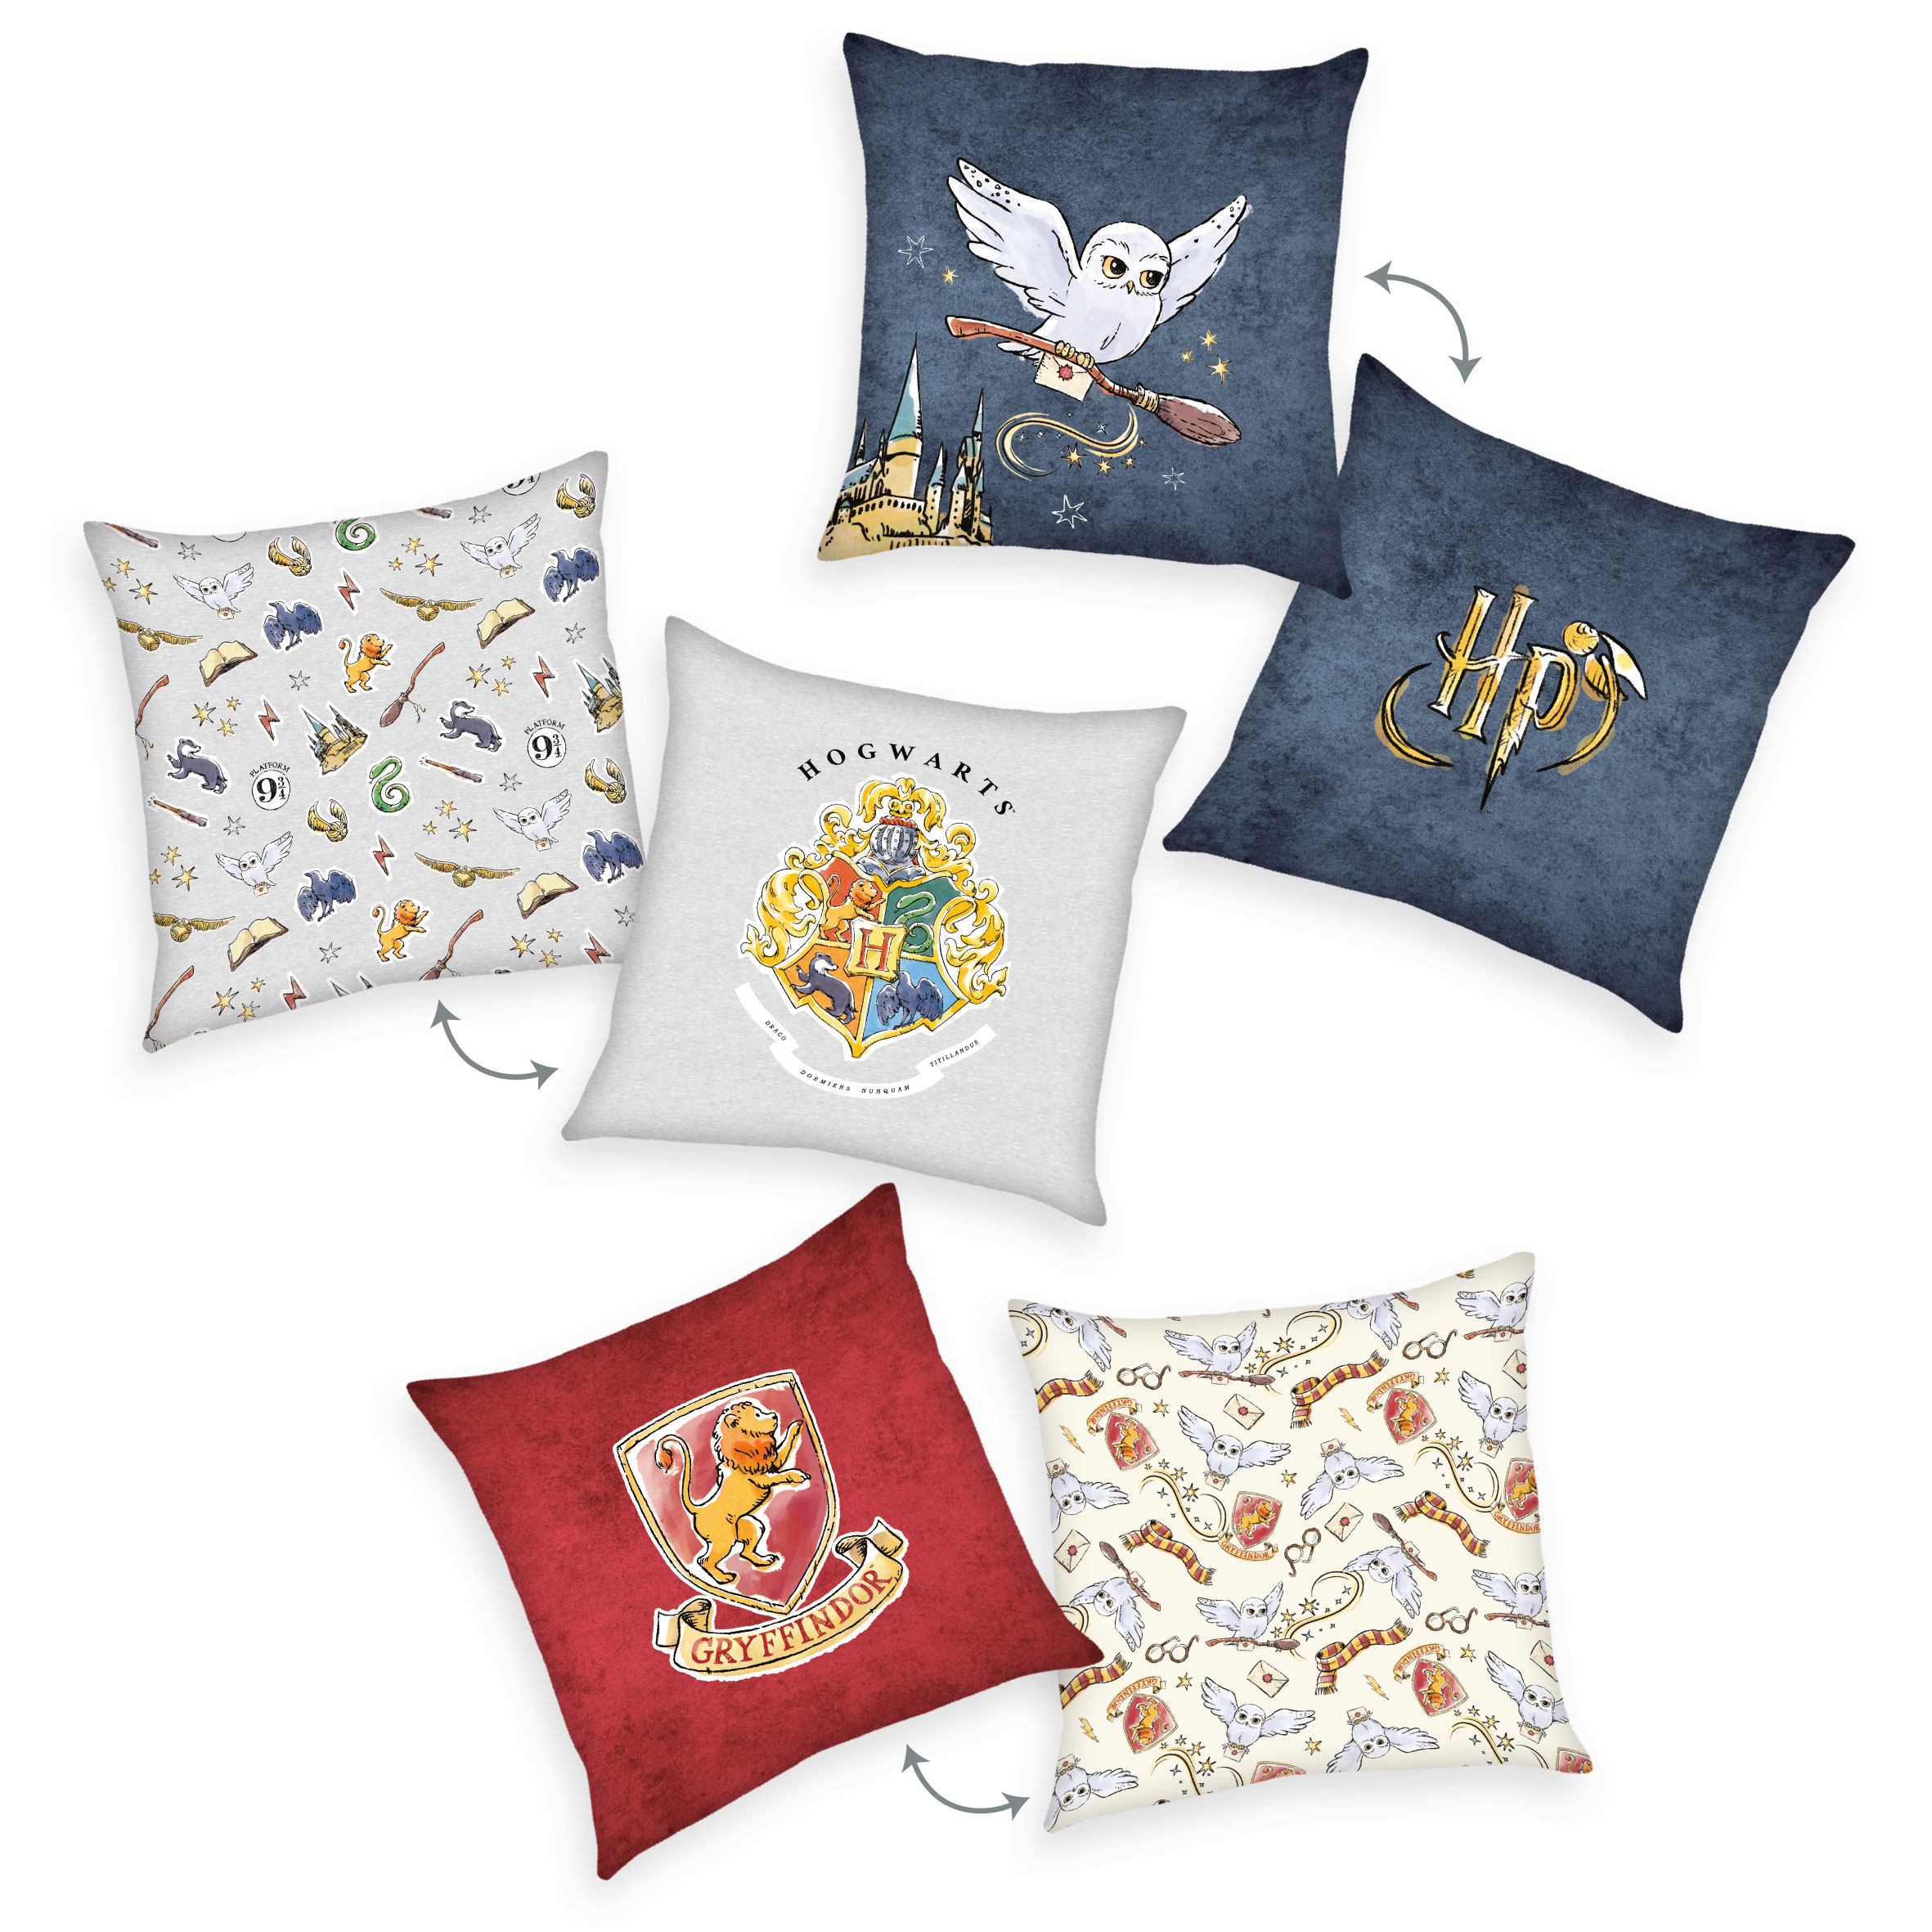 Harry Potter Pillows Logos 40 x 40 cm Assortment (15)